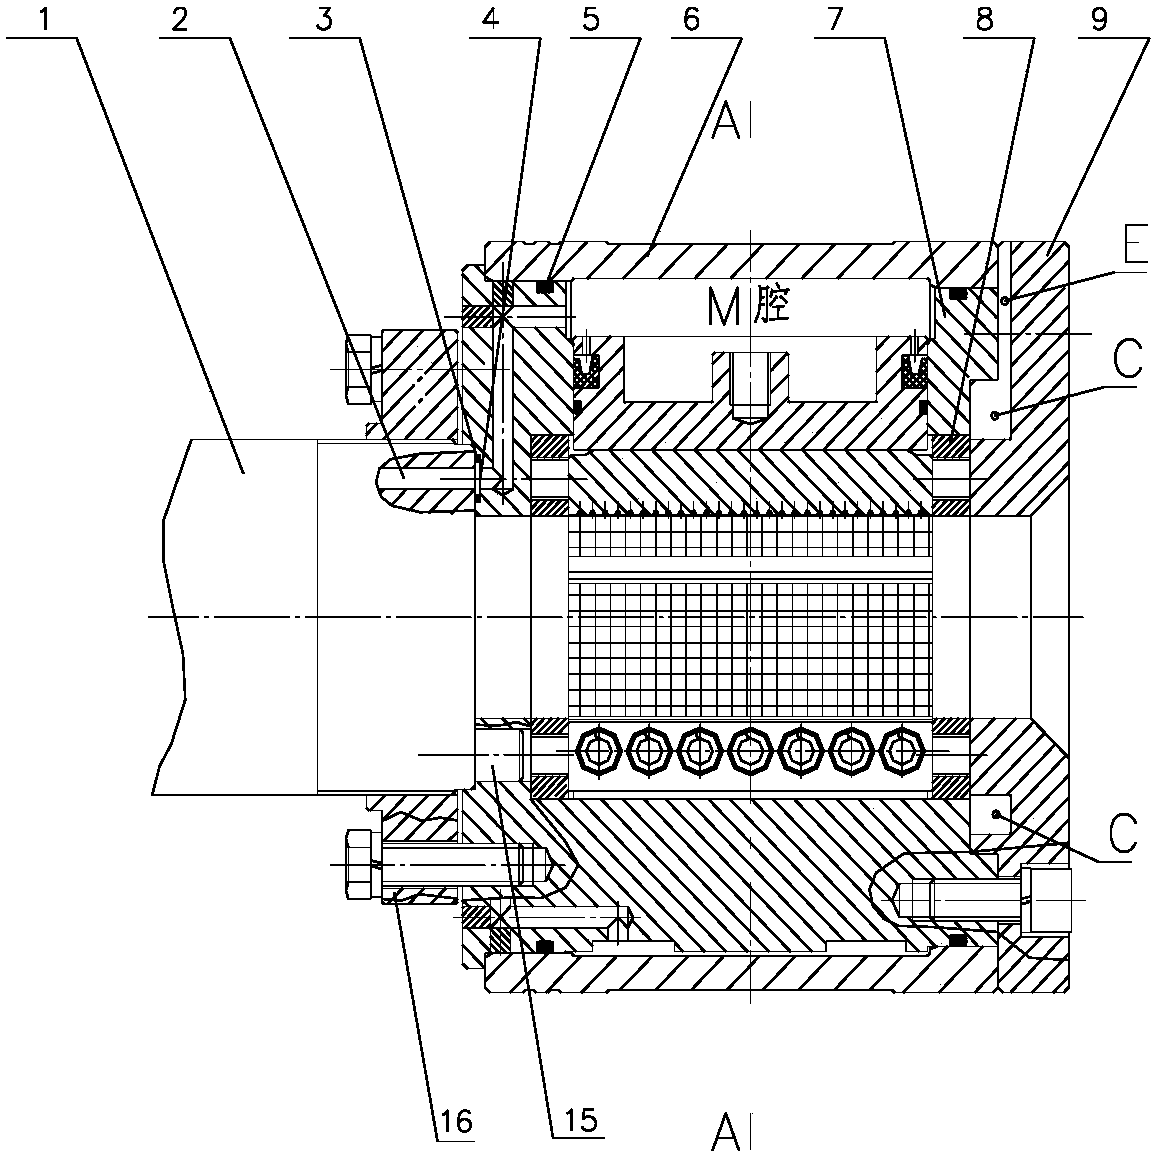 A piston hydraulic chuck